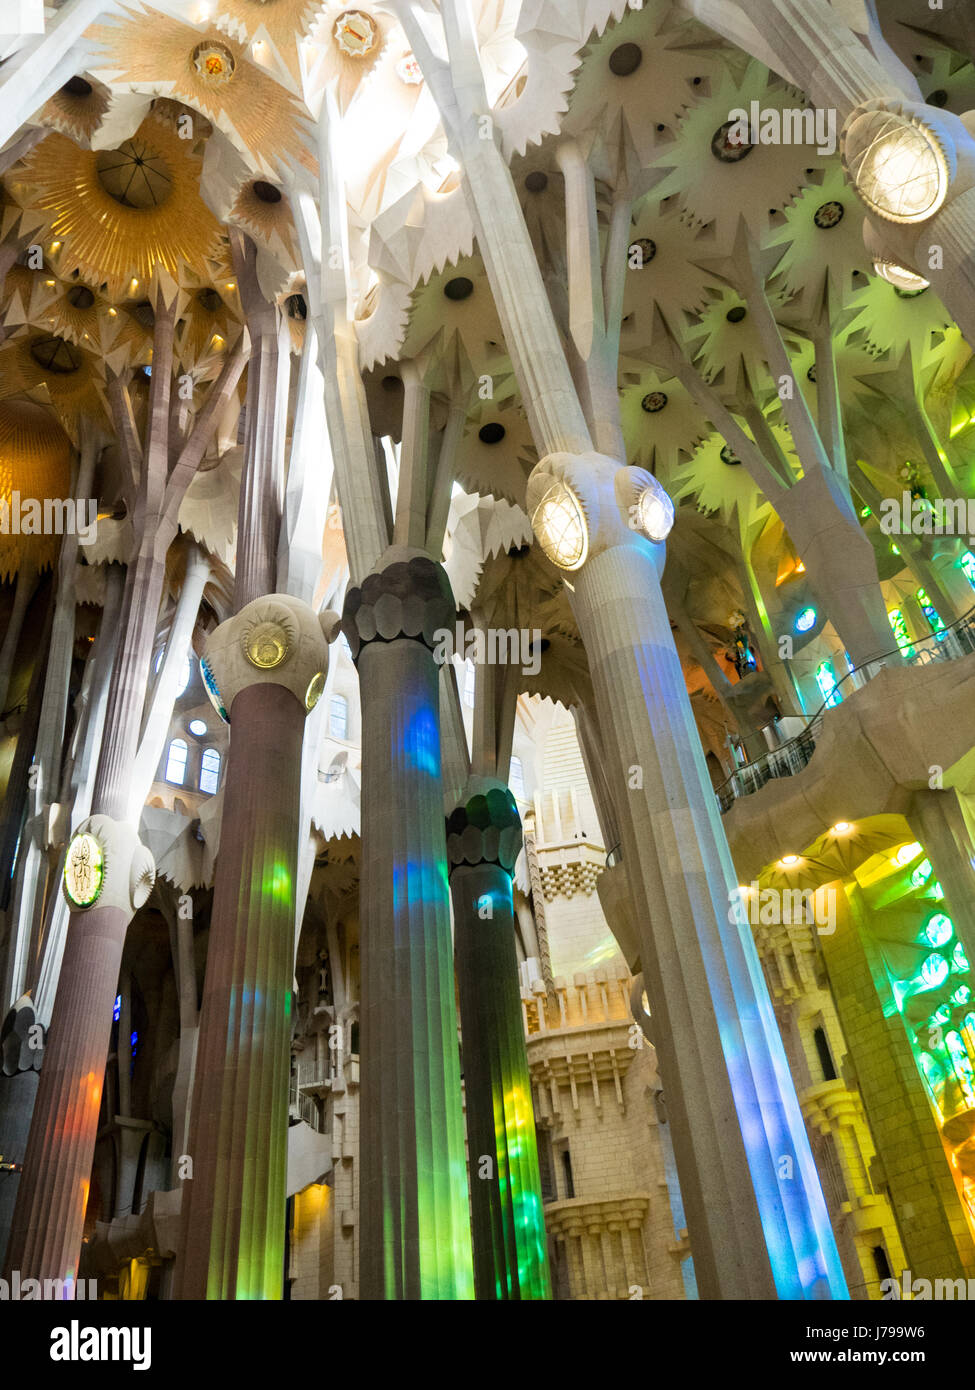 Decorative vaulted ceiling and columns in Gaudi's Sagrada Familia Basilica  in Barcelona Spain Stock Photo - Alamy